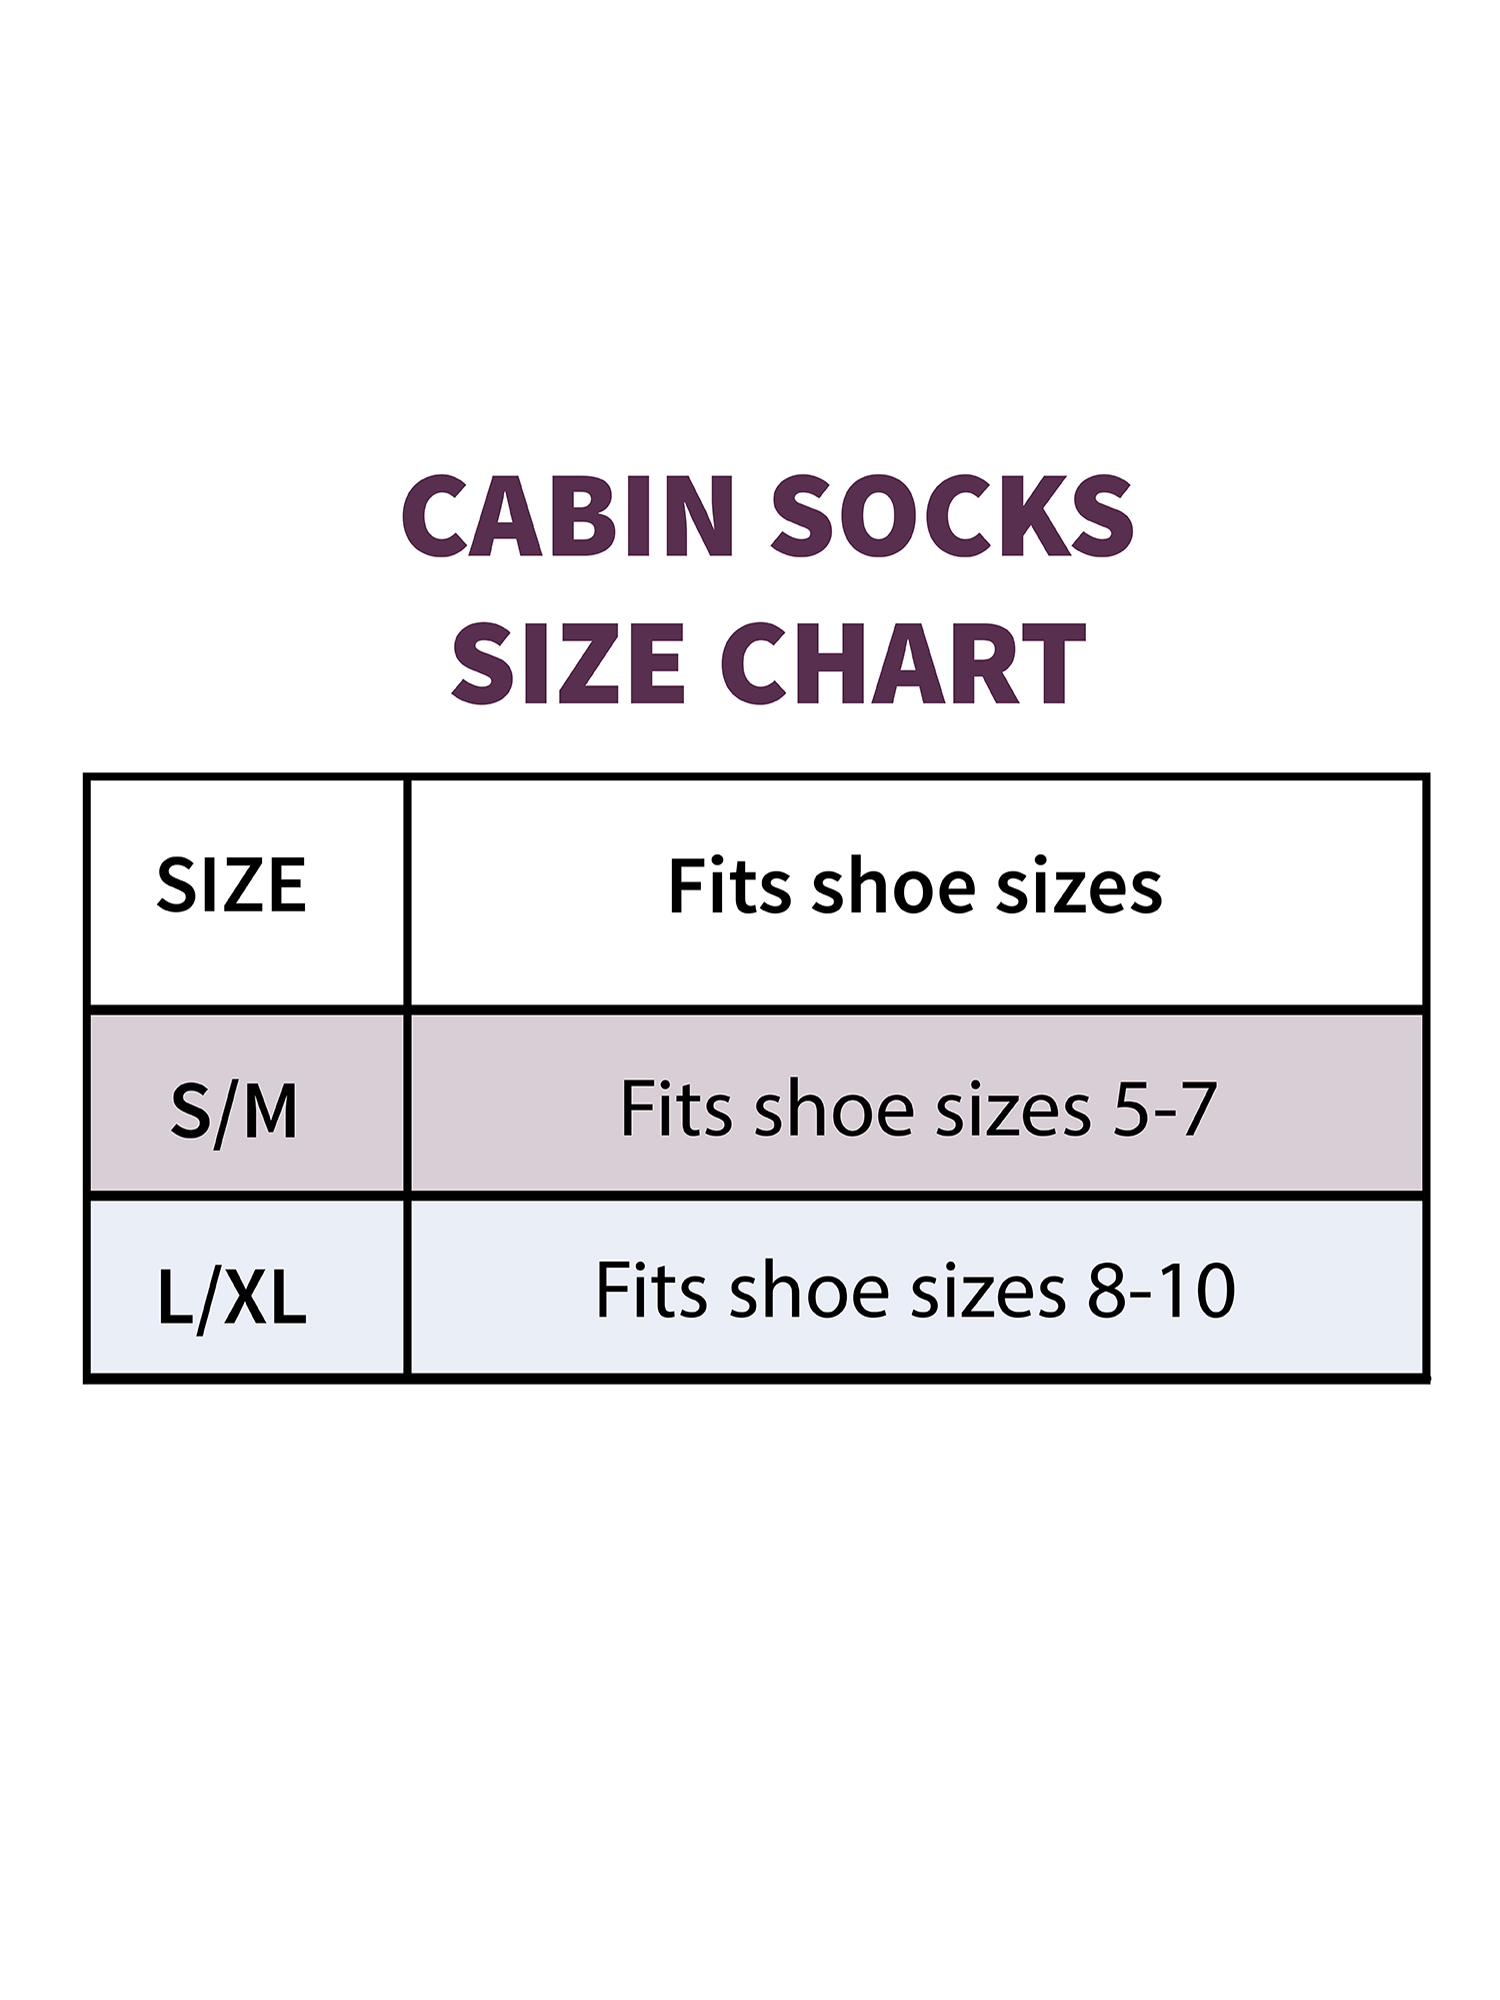 MUK LUKS Women's Cabin Socks, 2 Pairs - image 2 of 5